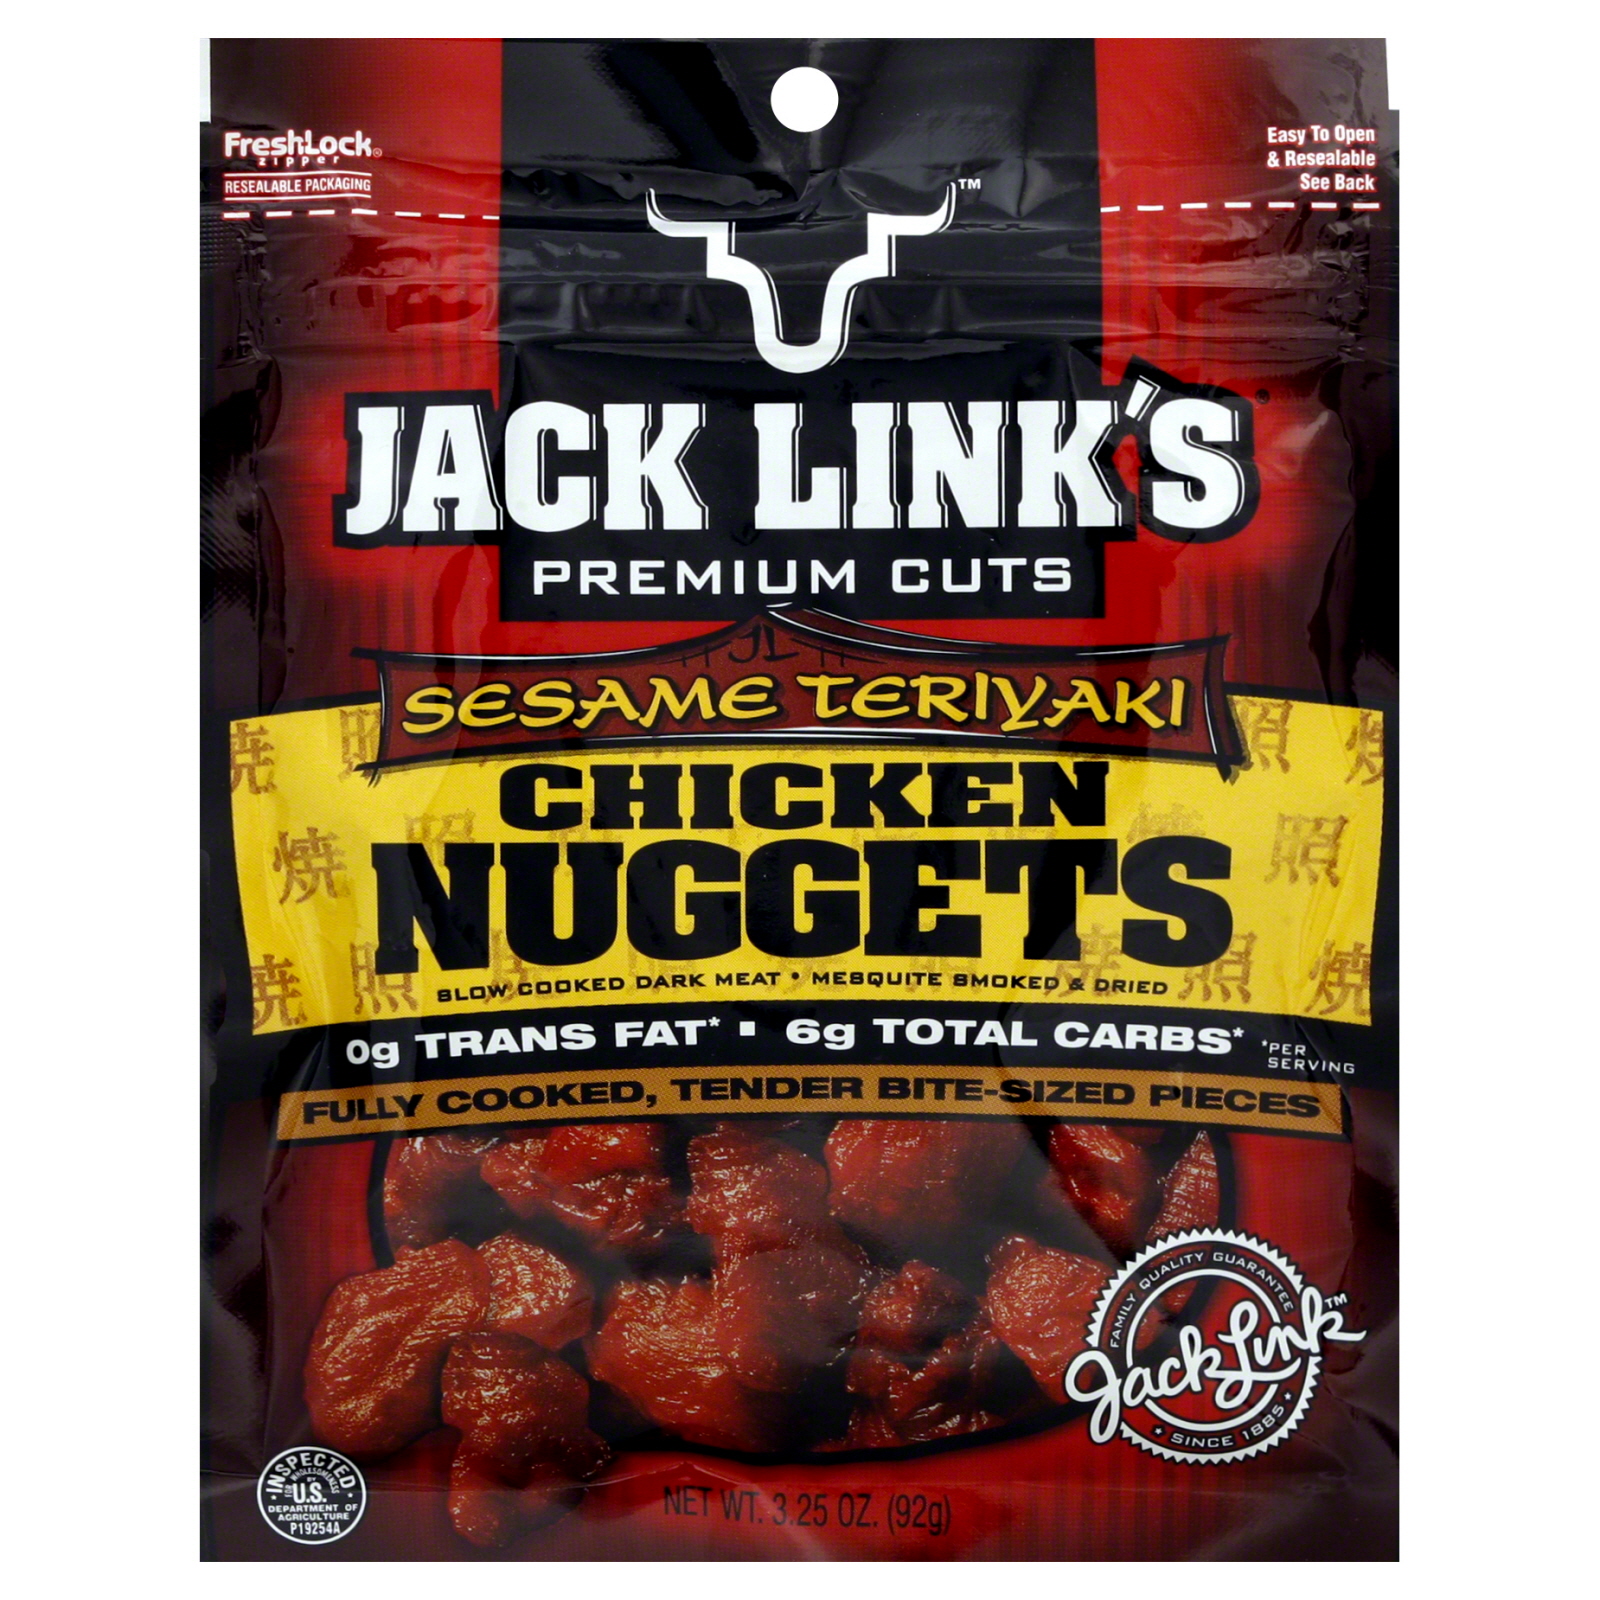 Jack Link's Premium Cuts Chicken Nuggets, Sesame Teriyaki, 3.25 oz (92 g)